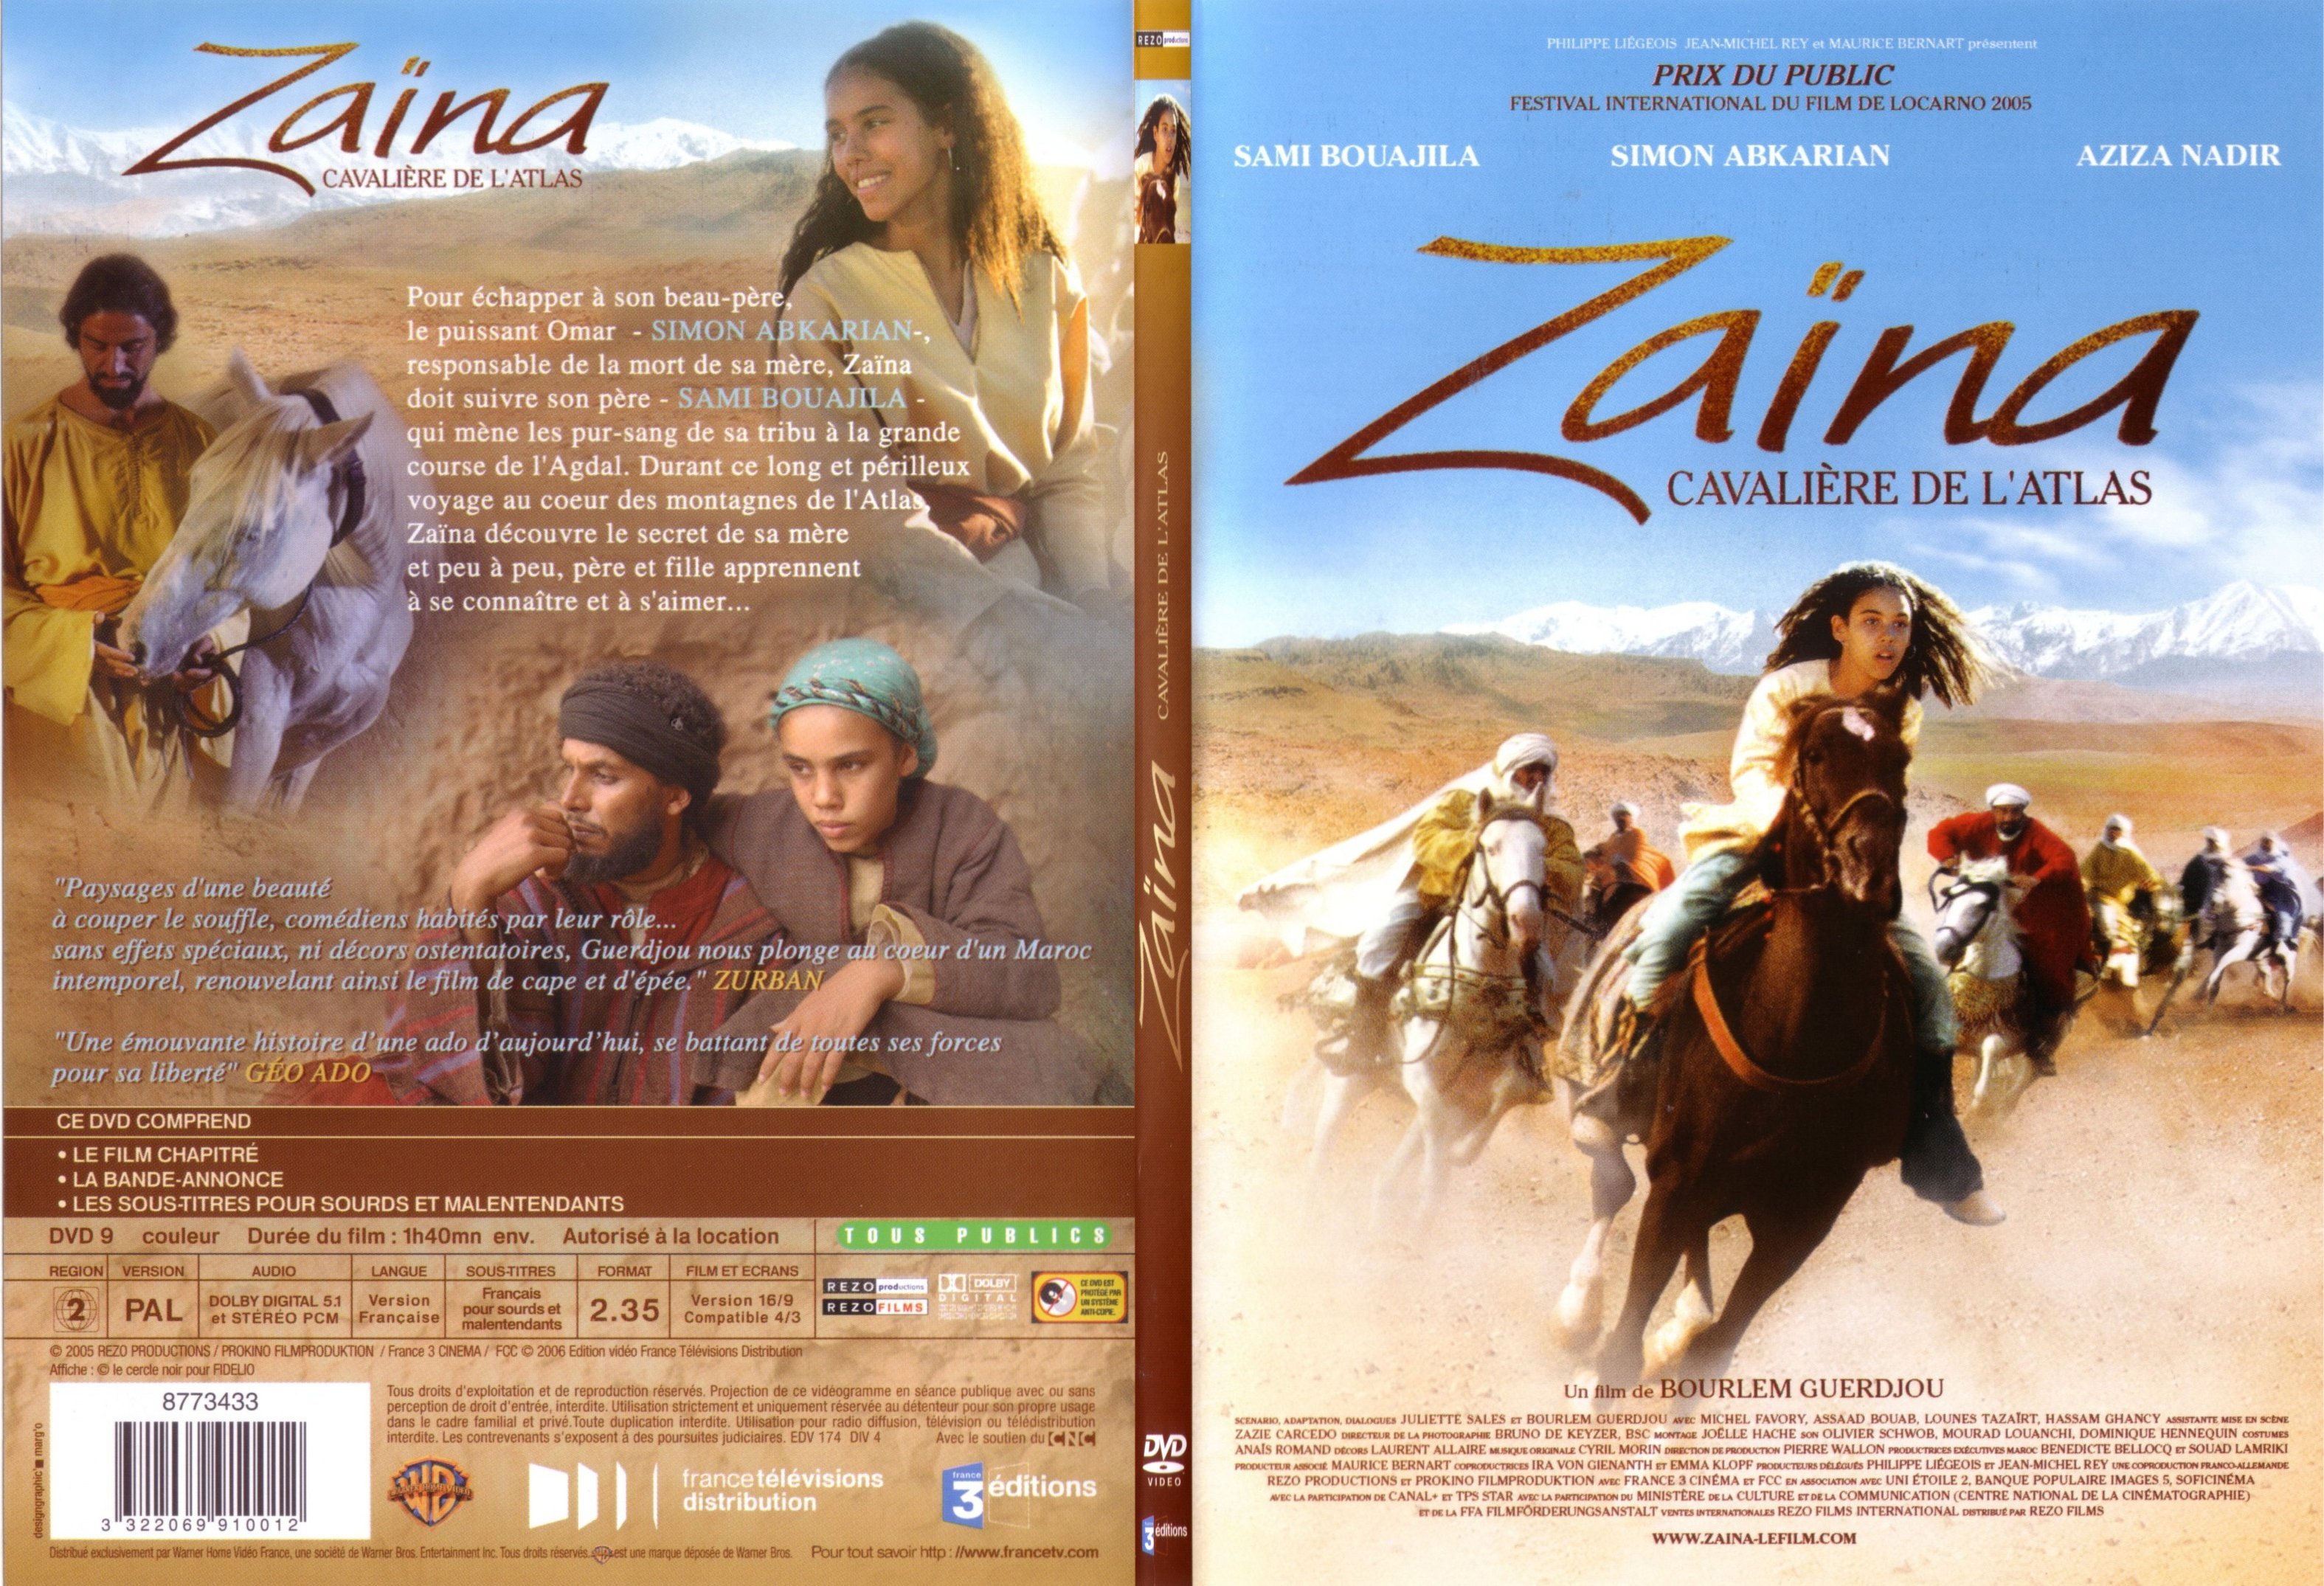 Jaquette DVD Zaina cavaliere de l